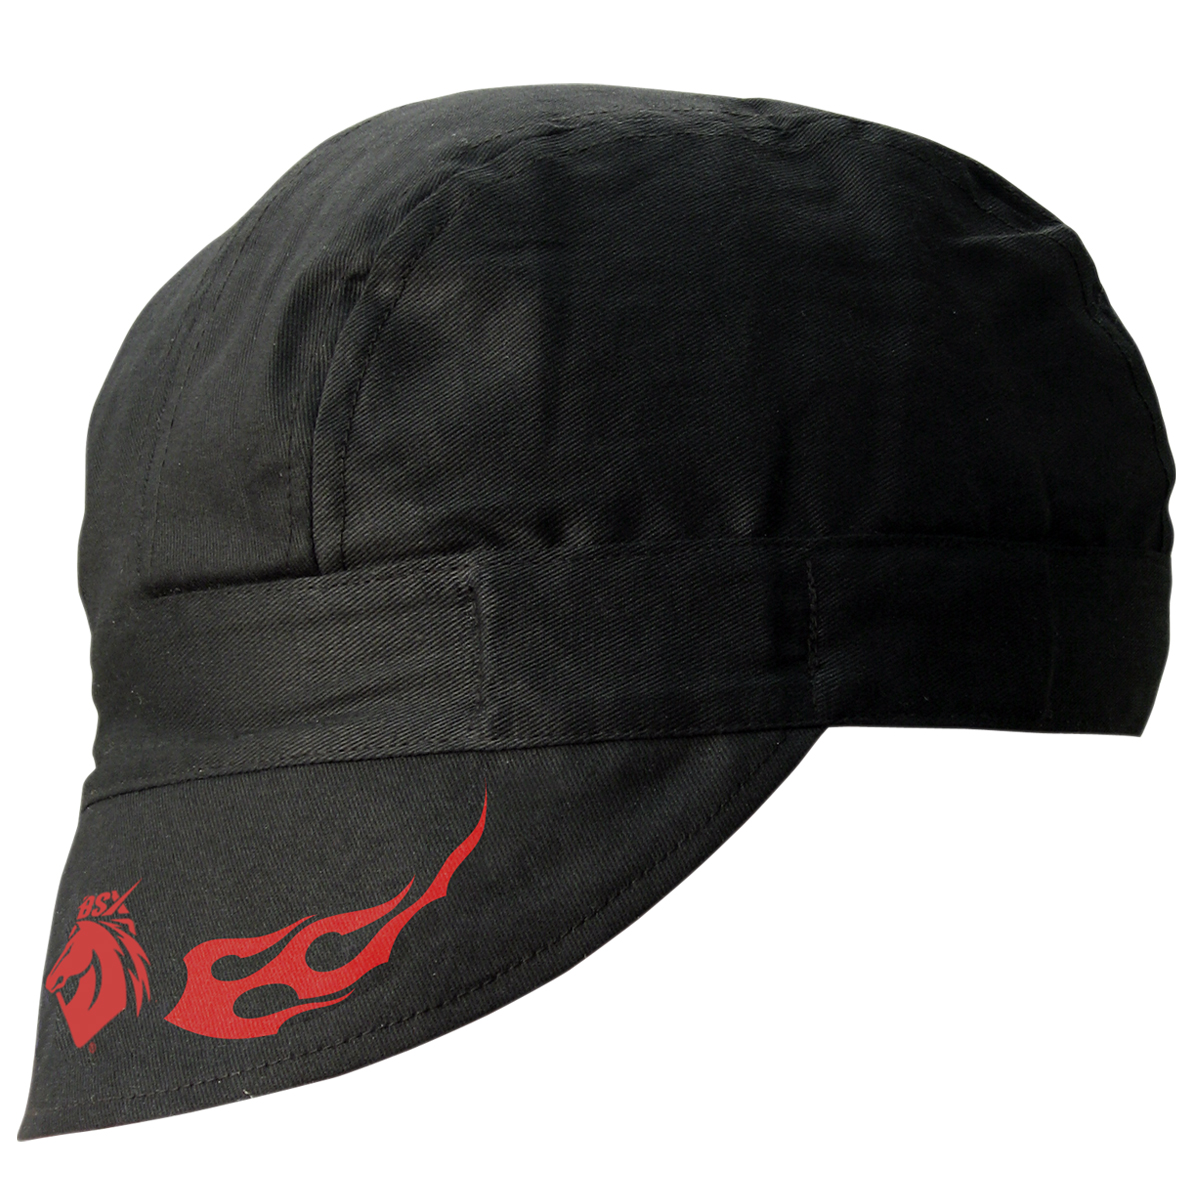 BSX BLACK - RED FLAME LOGO ARMORCAP WELDING CAP